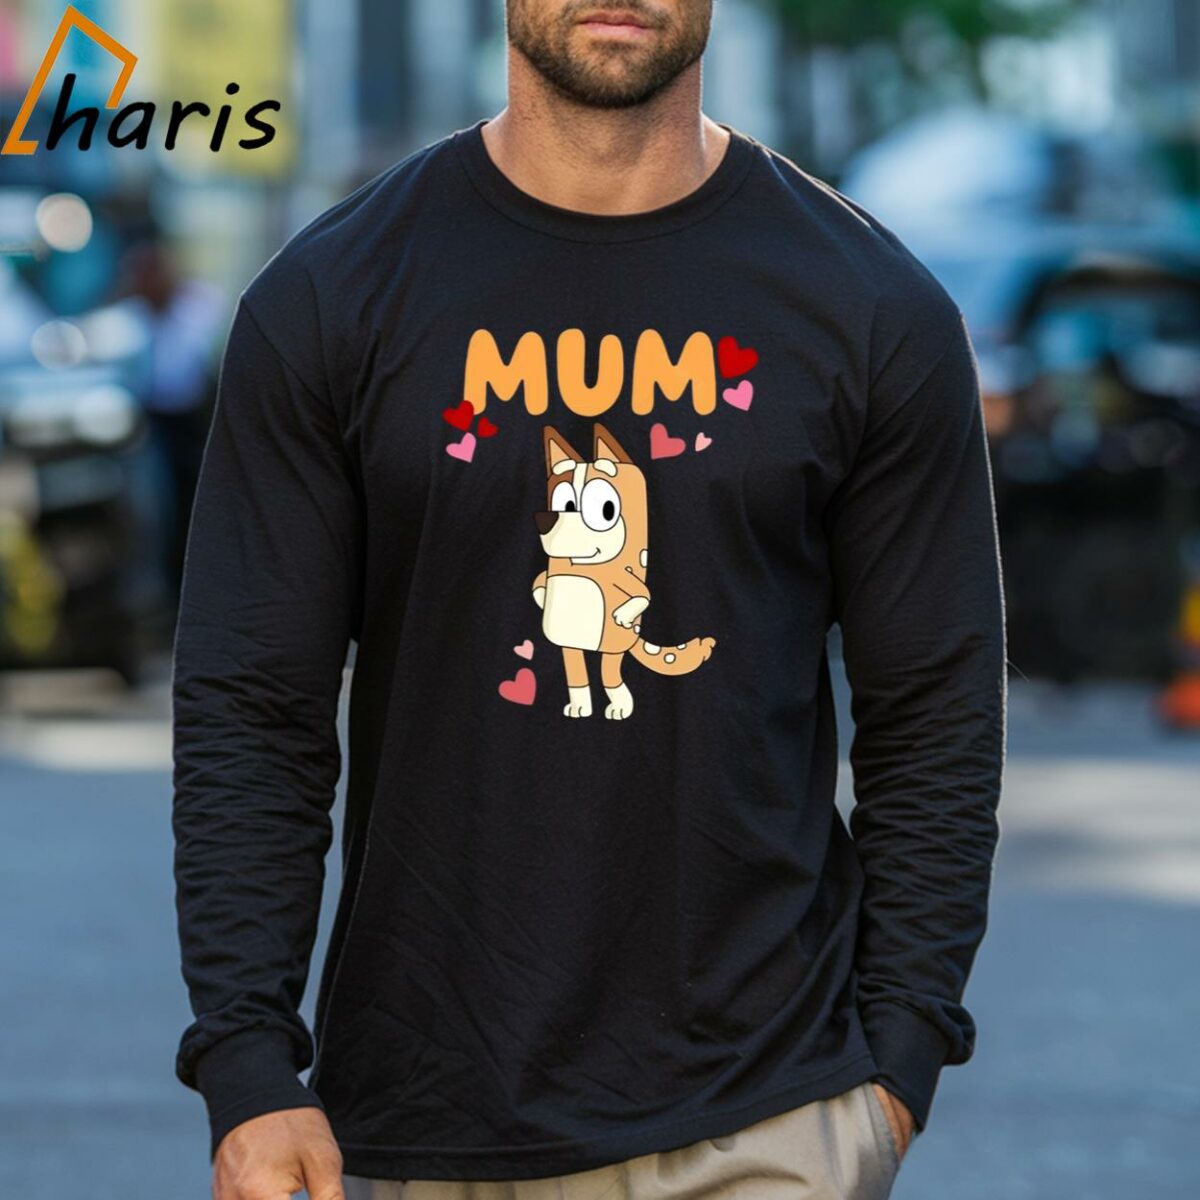 Bluey And Bingo Heart Mum Shirt Good Mothers Day Gifts 3 Long sleeve shirt